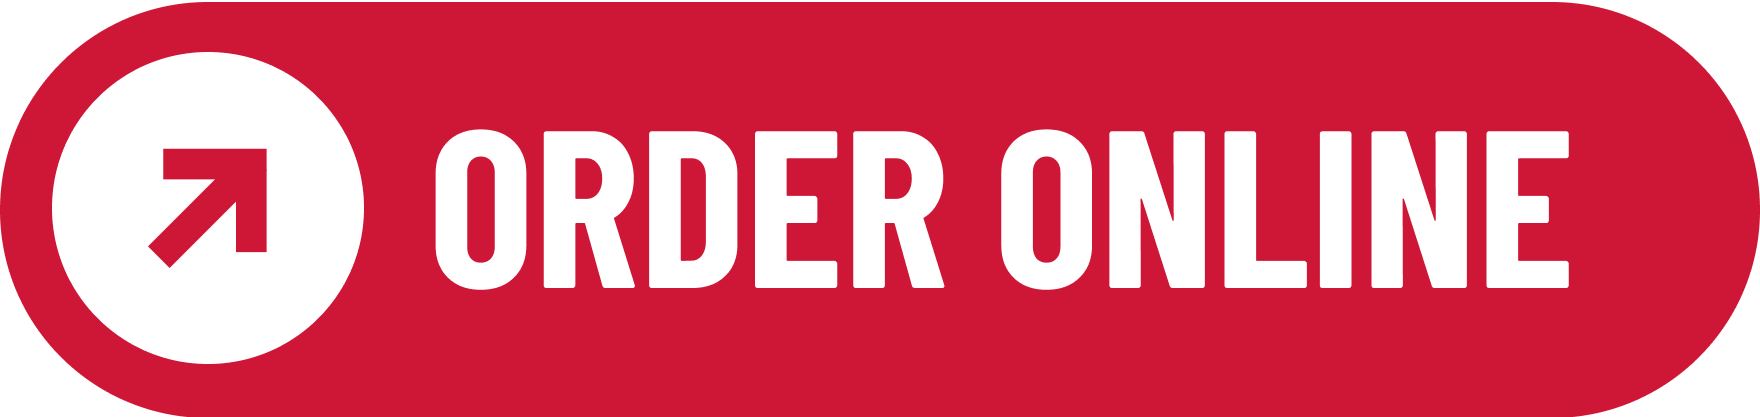 Red Button Order Online